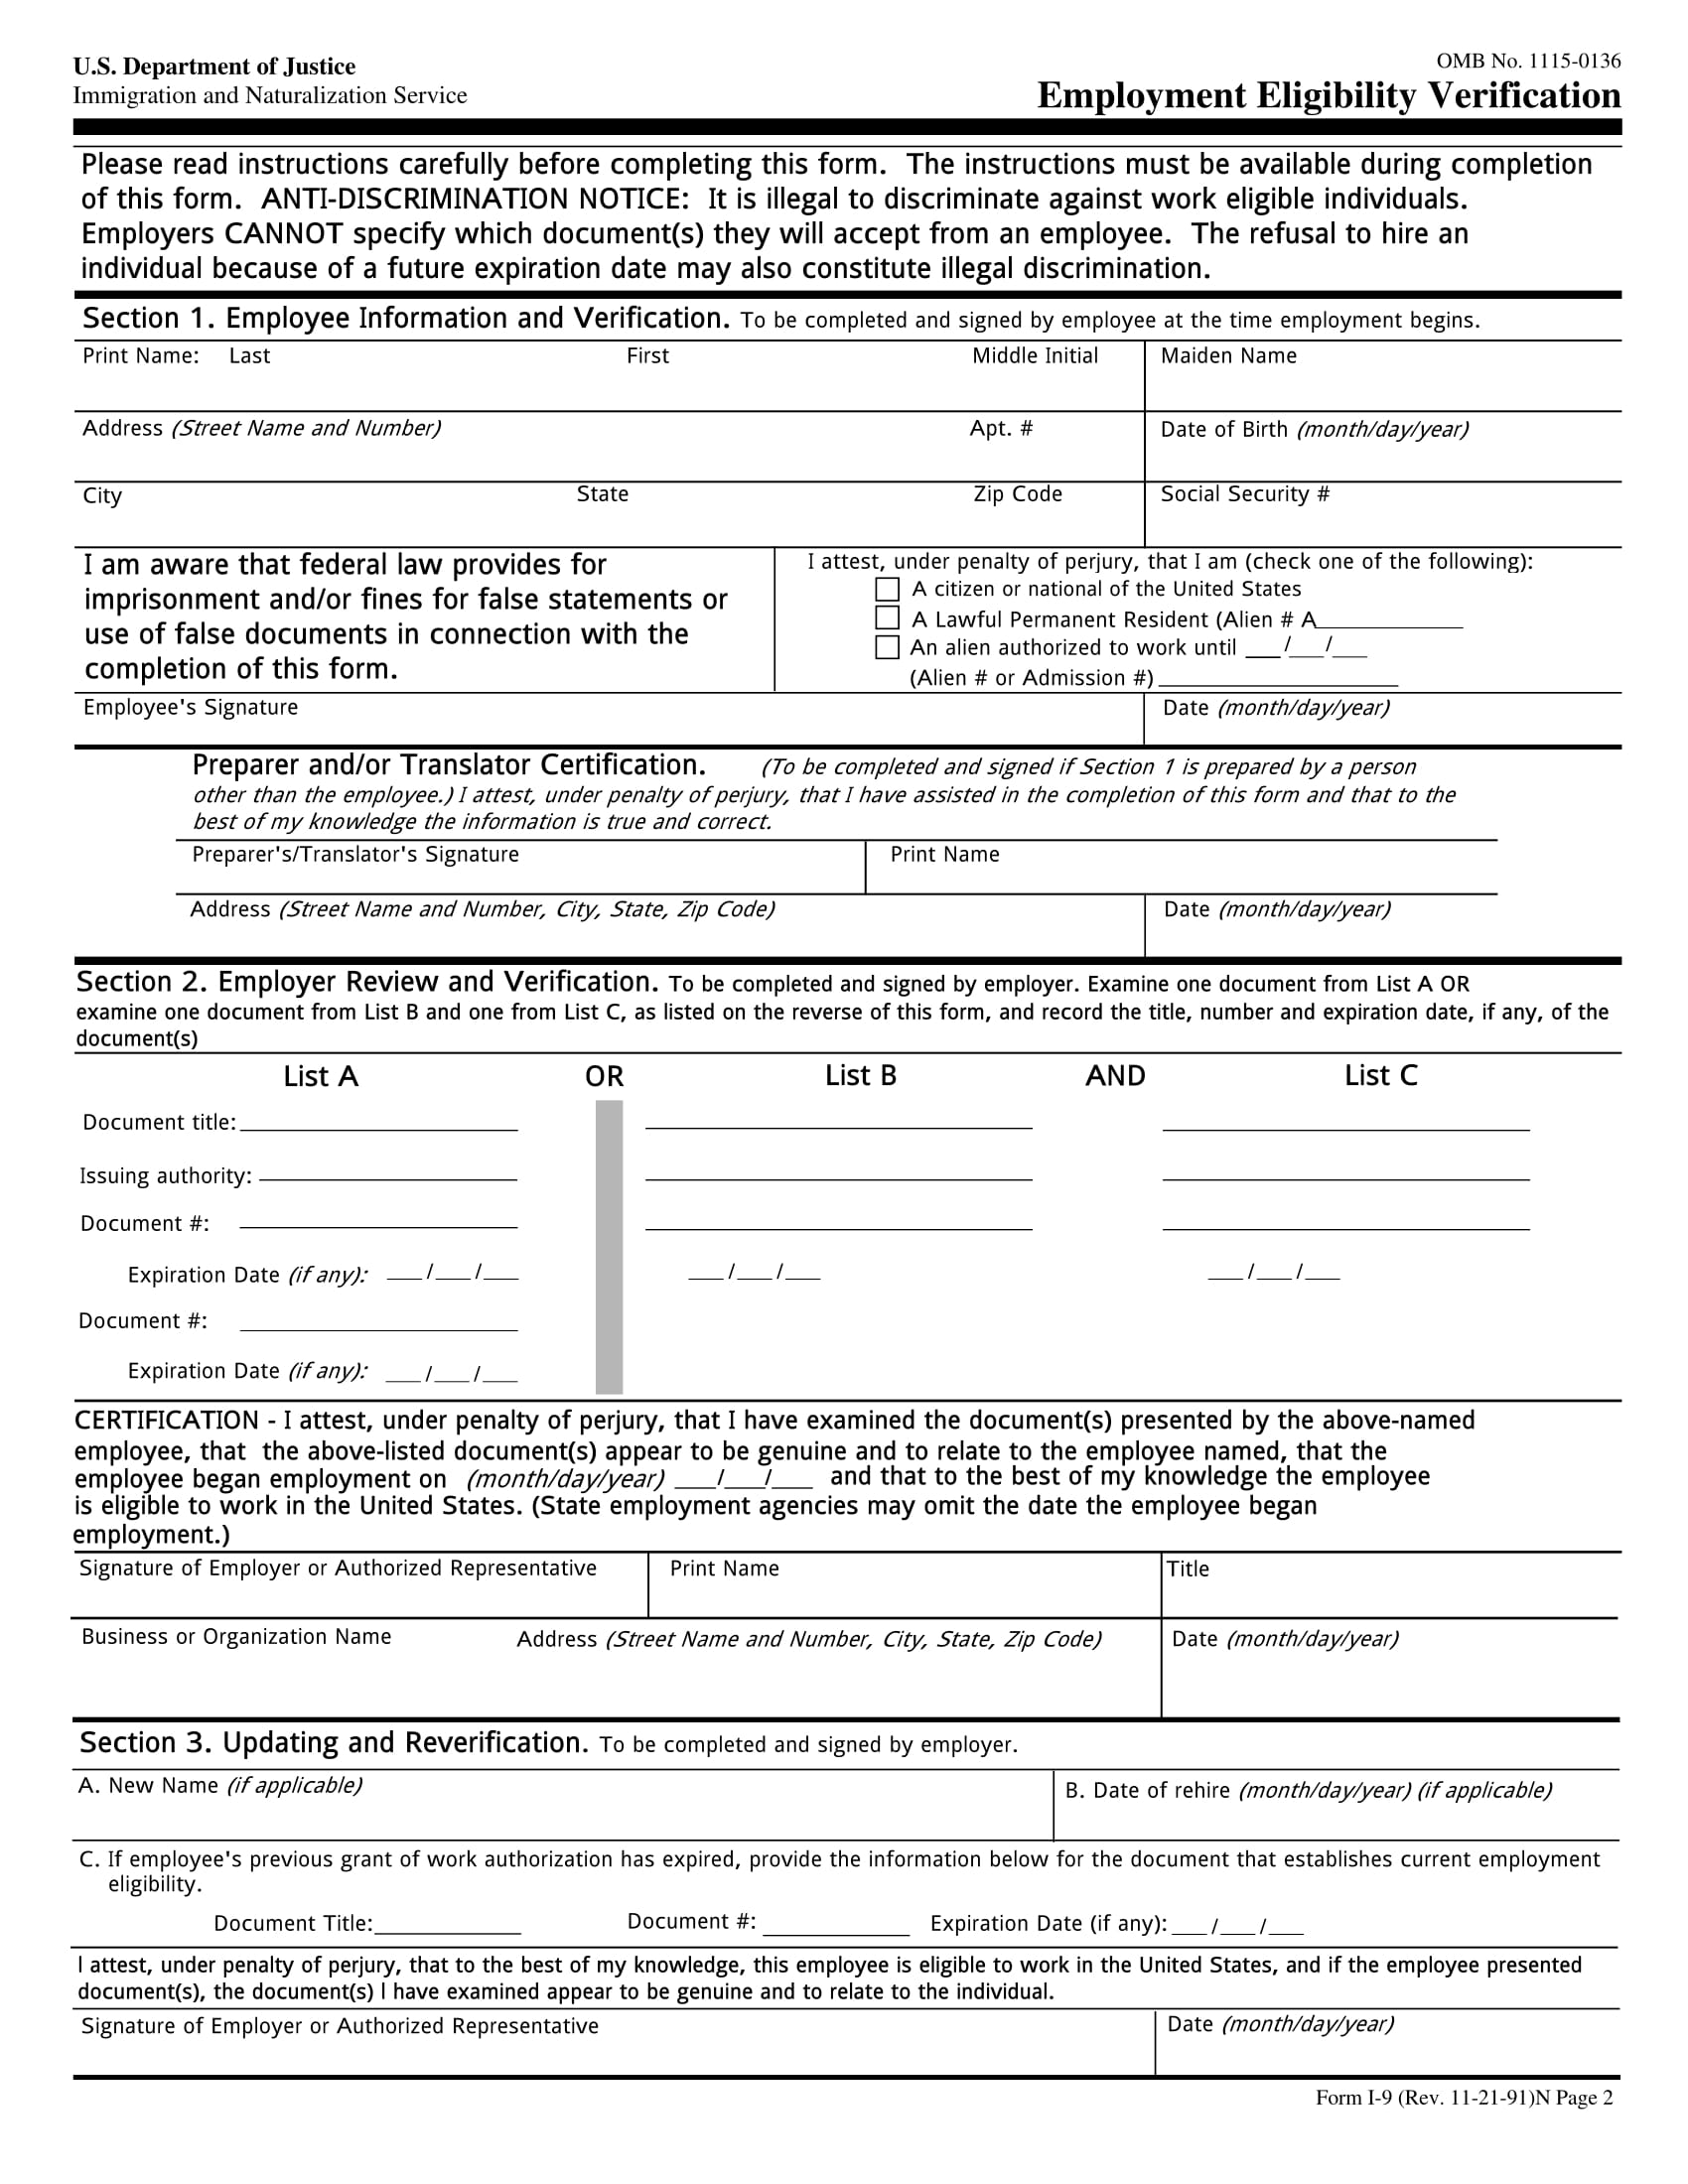 doj employment verification form 1